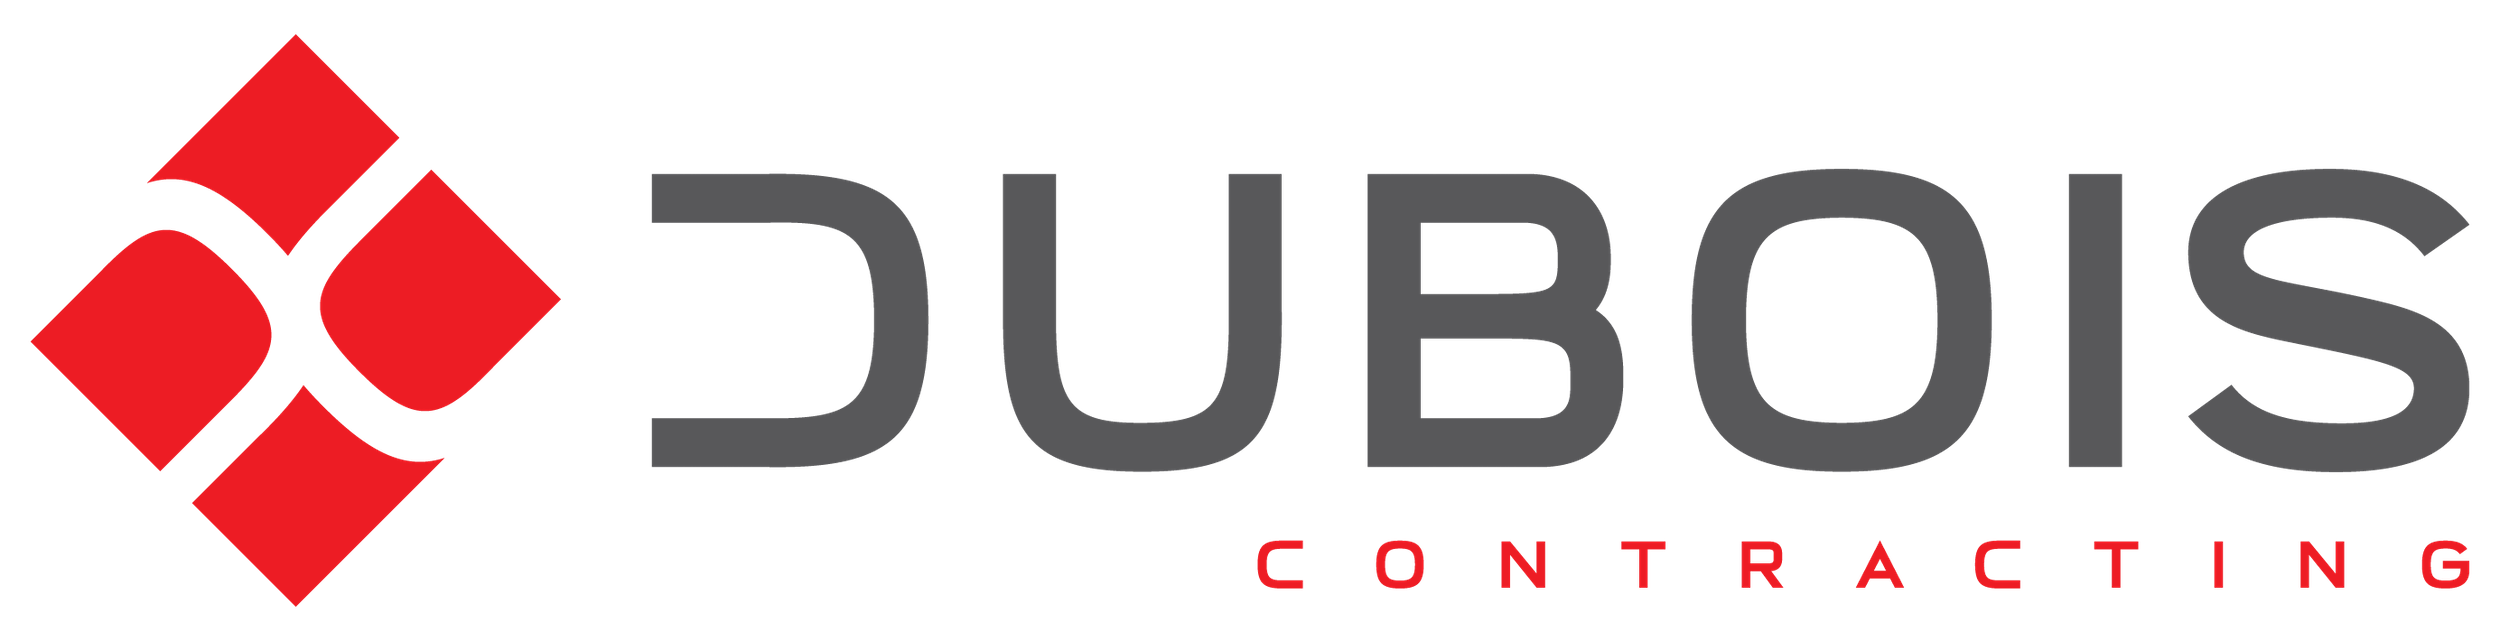 Dubois Contracting, Inc.  |  Construction &amp; Development Company Northwest Florida